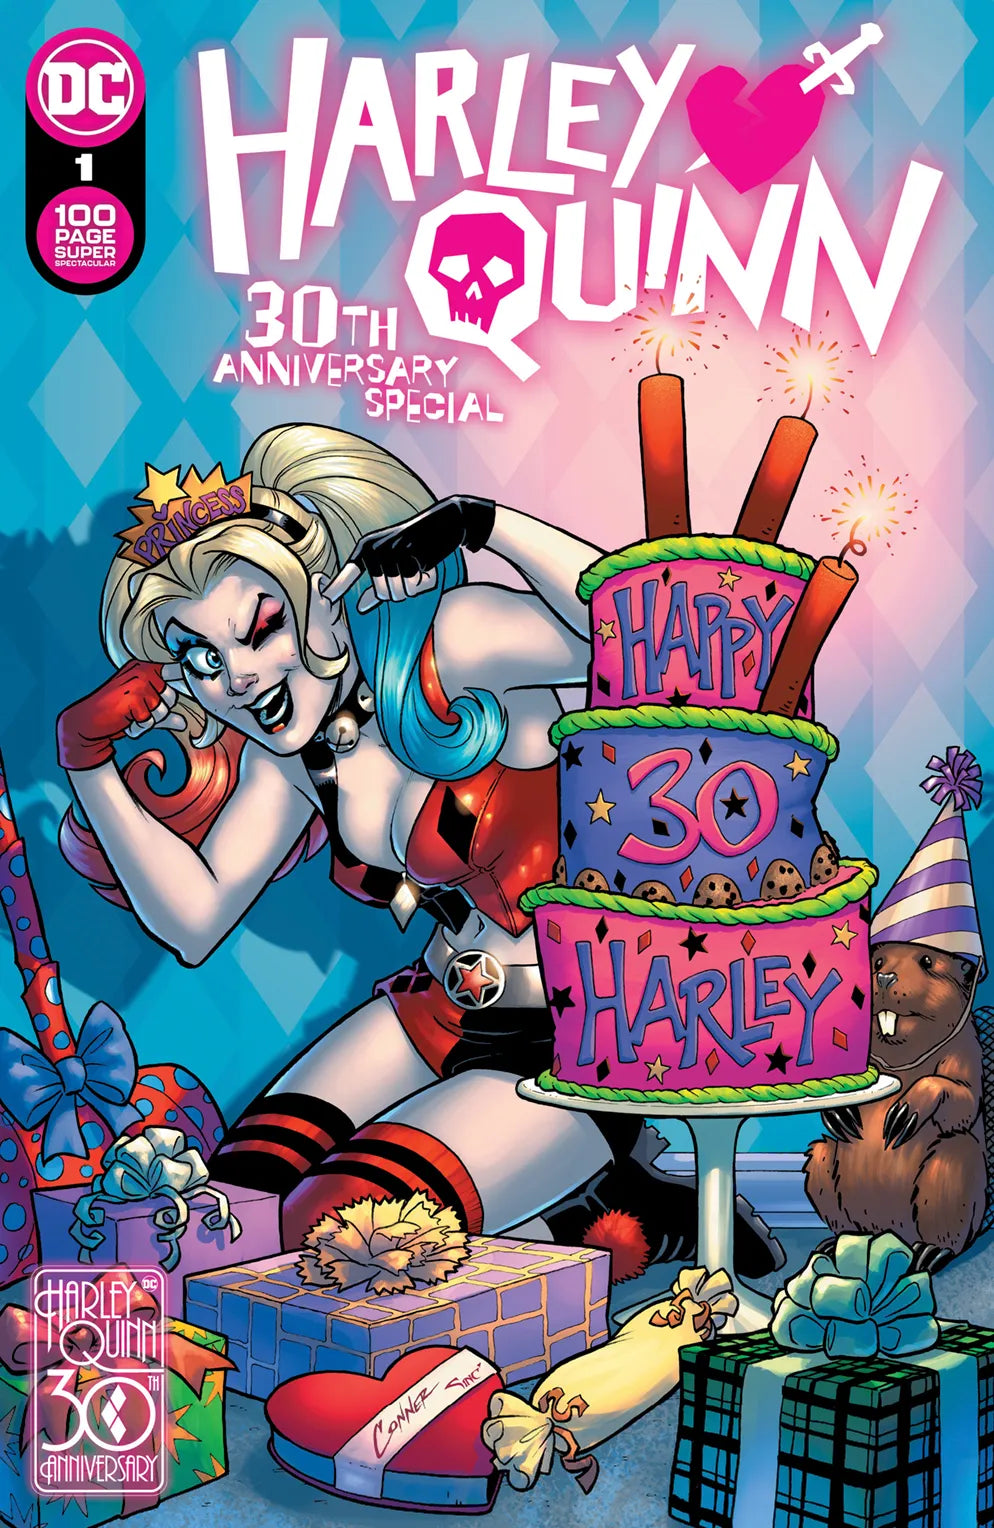 Celebrate Harley Quinn's 30th Anniversary!